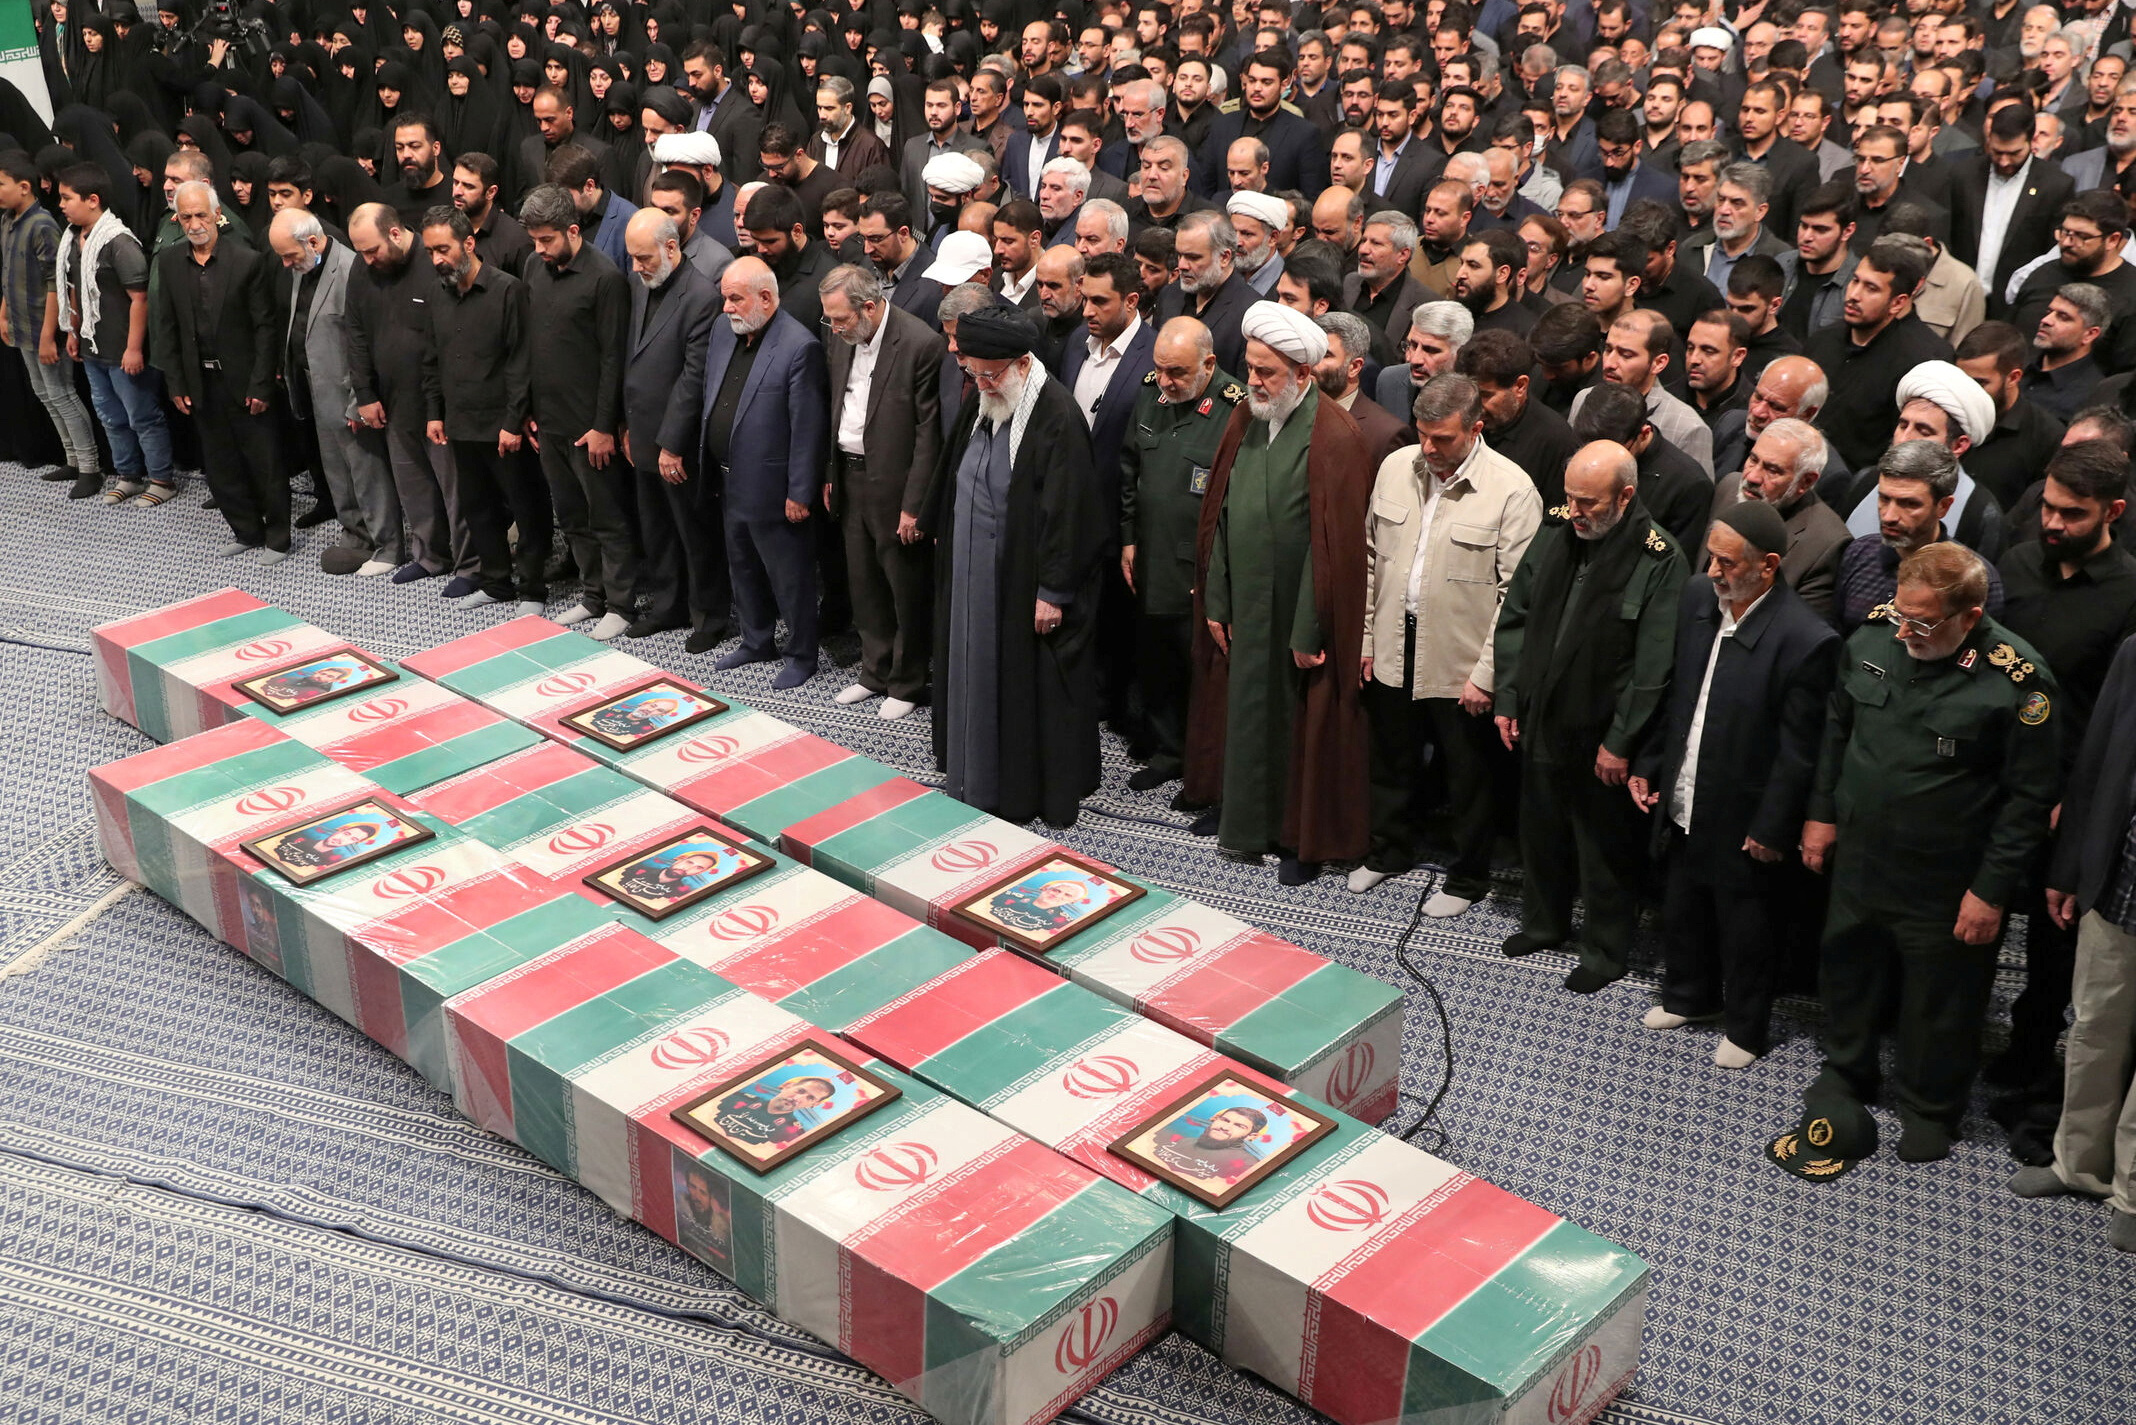 Iran's Supreme Leader, Ayatollah Ali Khamenei prays next to the coffins of members of the Islamic Revolutionary Guard Corps, in Tehran